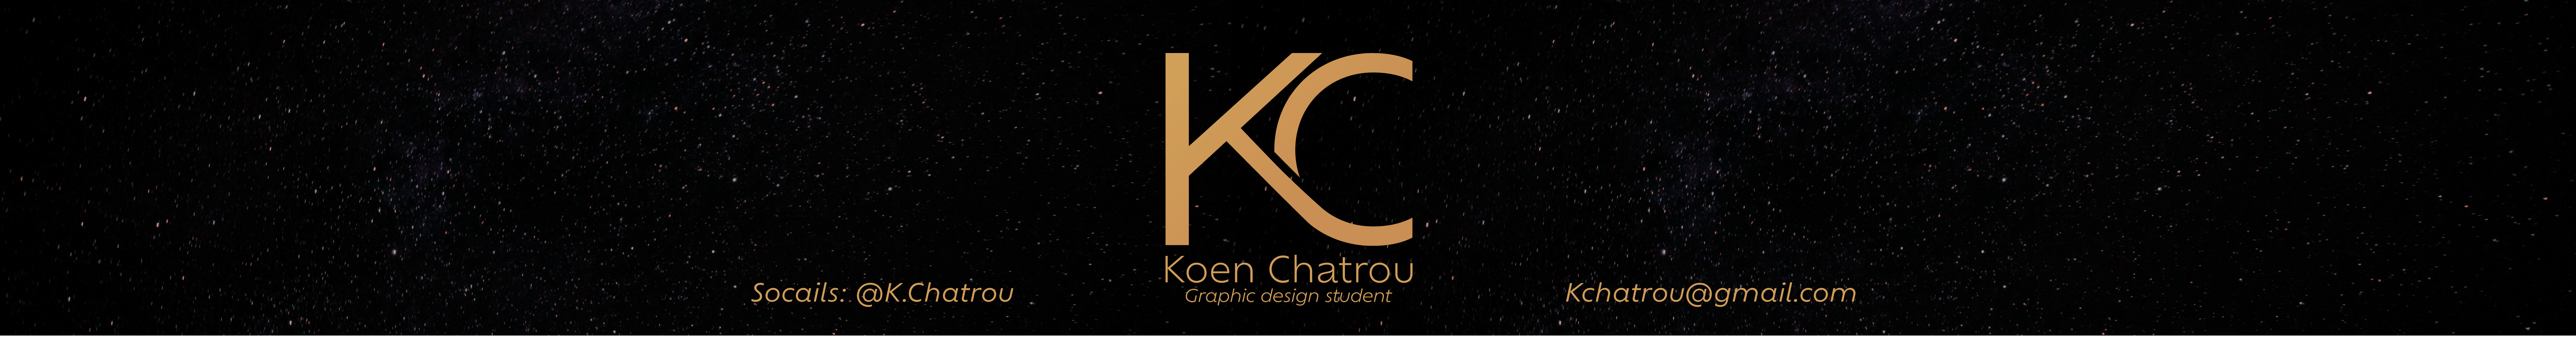 Баннер профиля Koen Chatrou